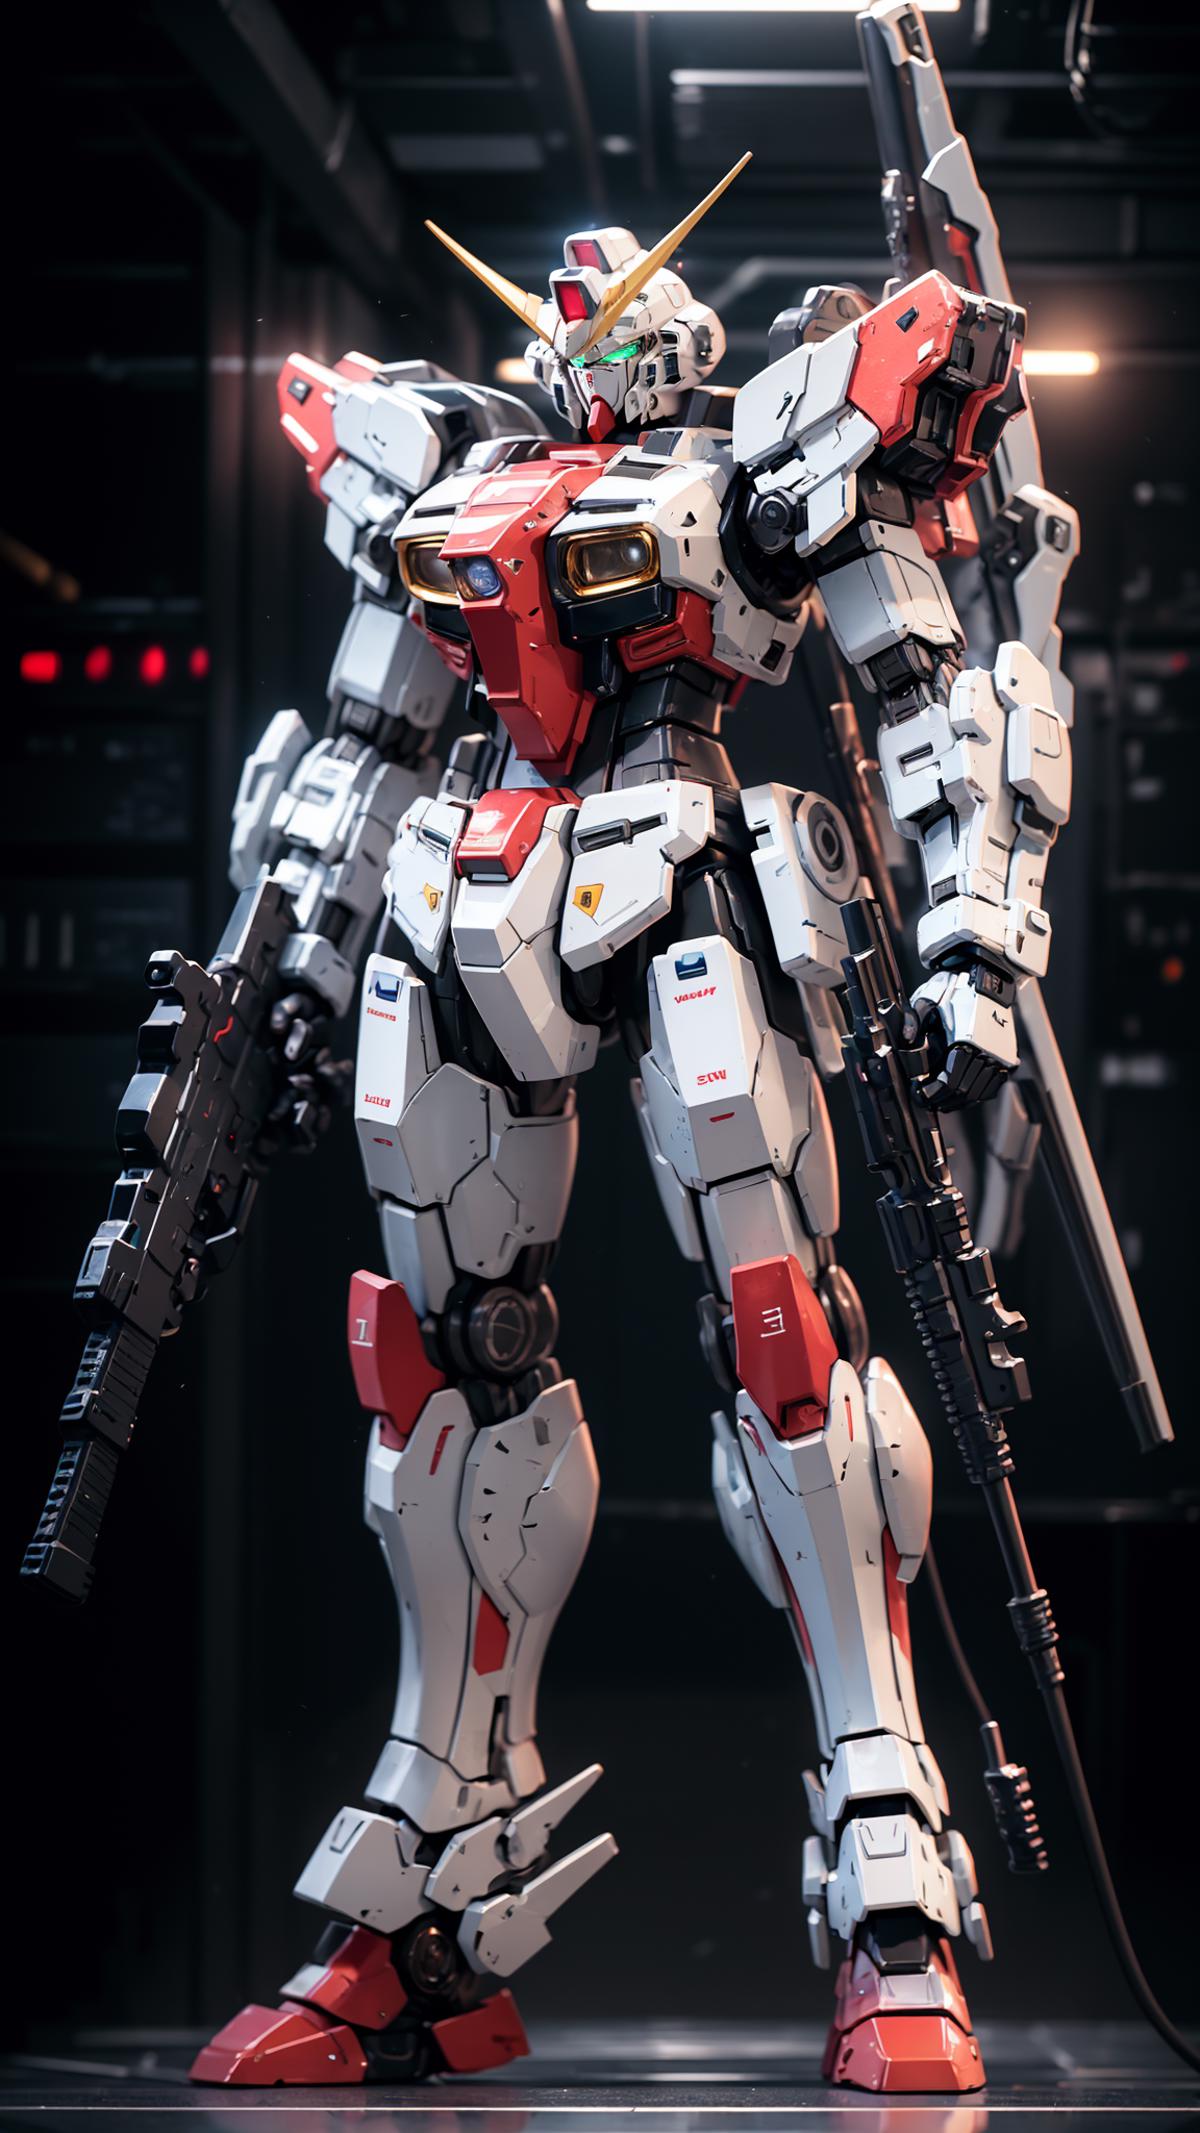 Gundam_Mecha 高达机甲 image by A_banana